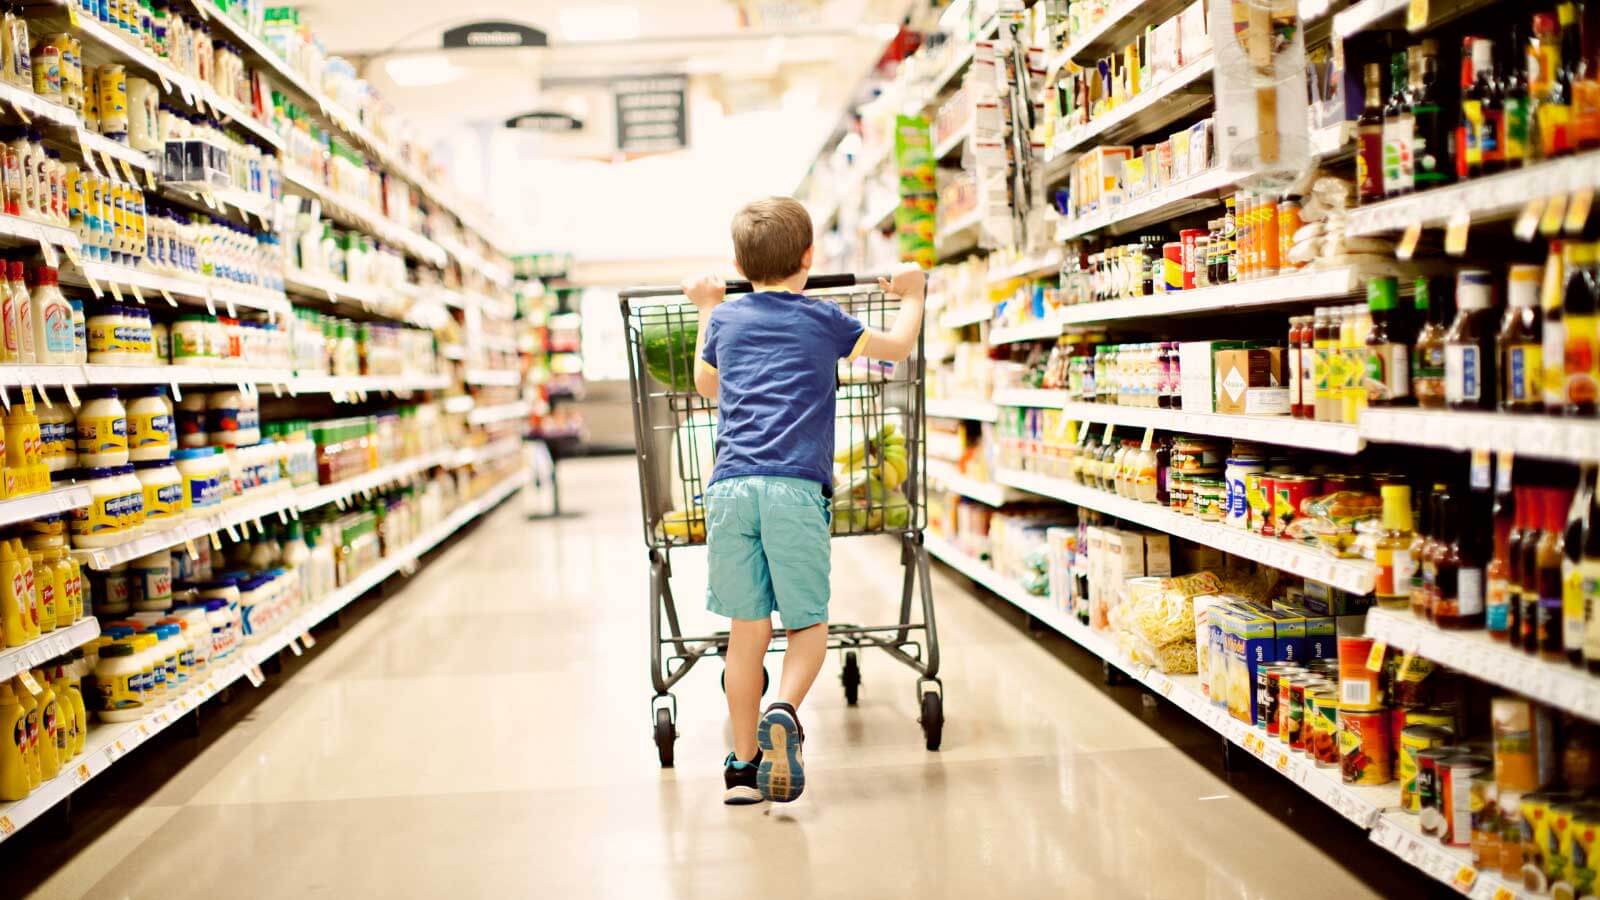 children’s exposure to unhealthy food marketing